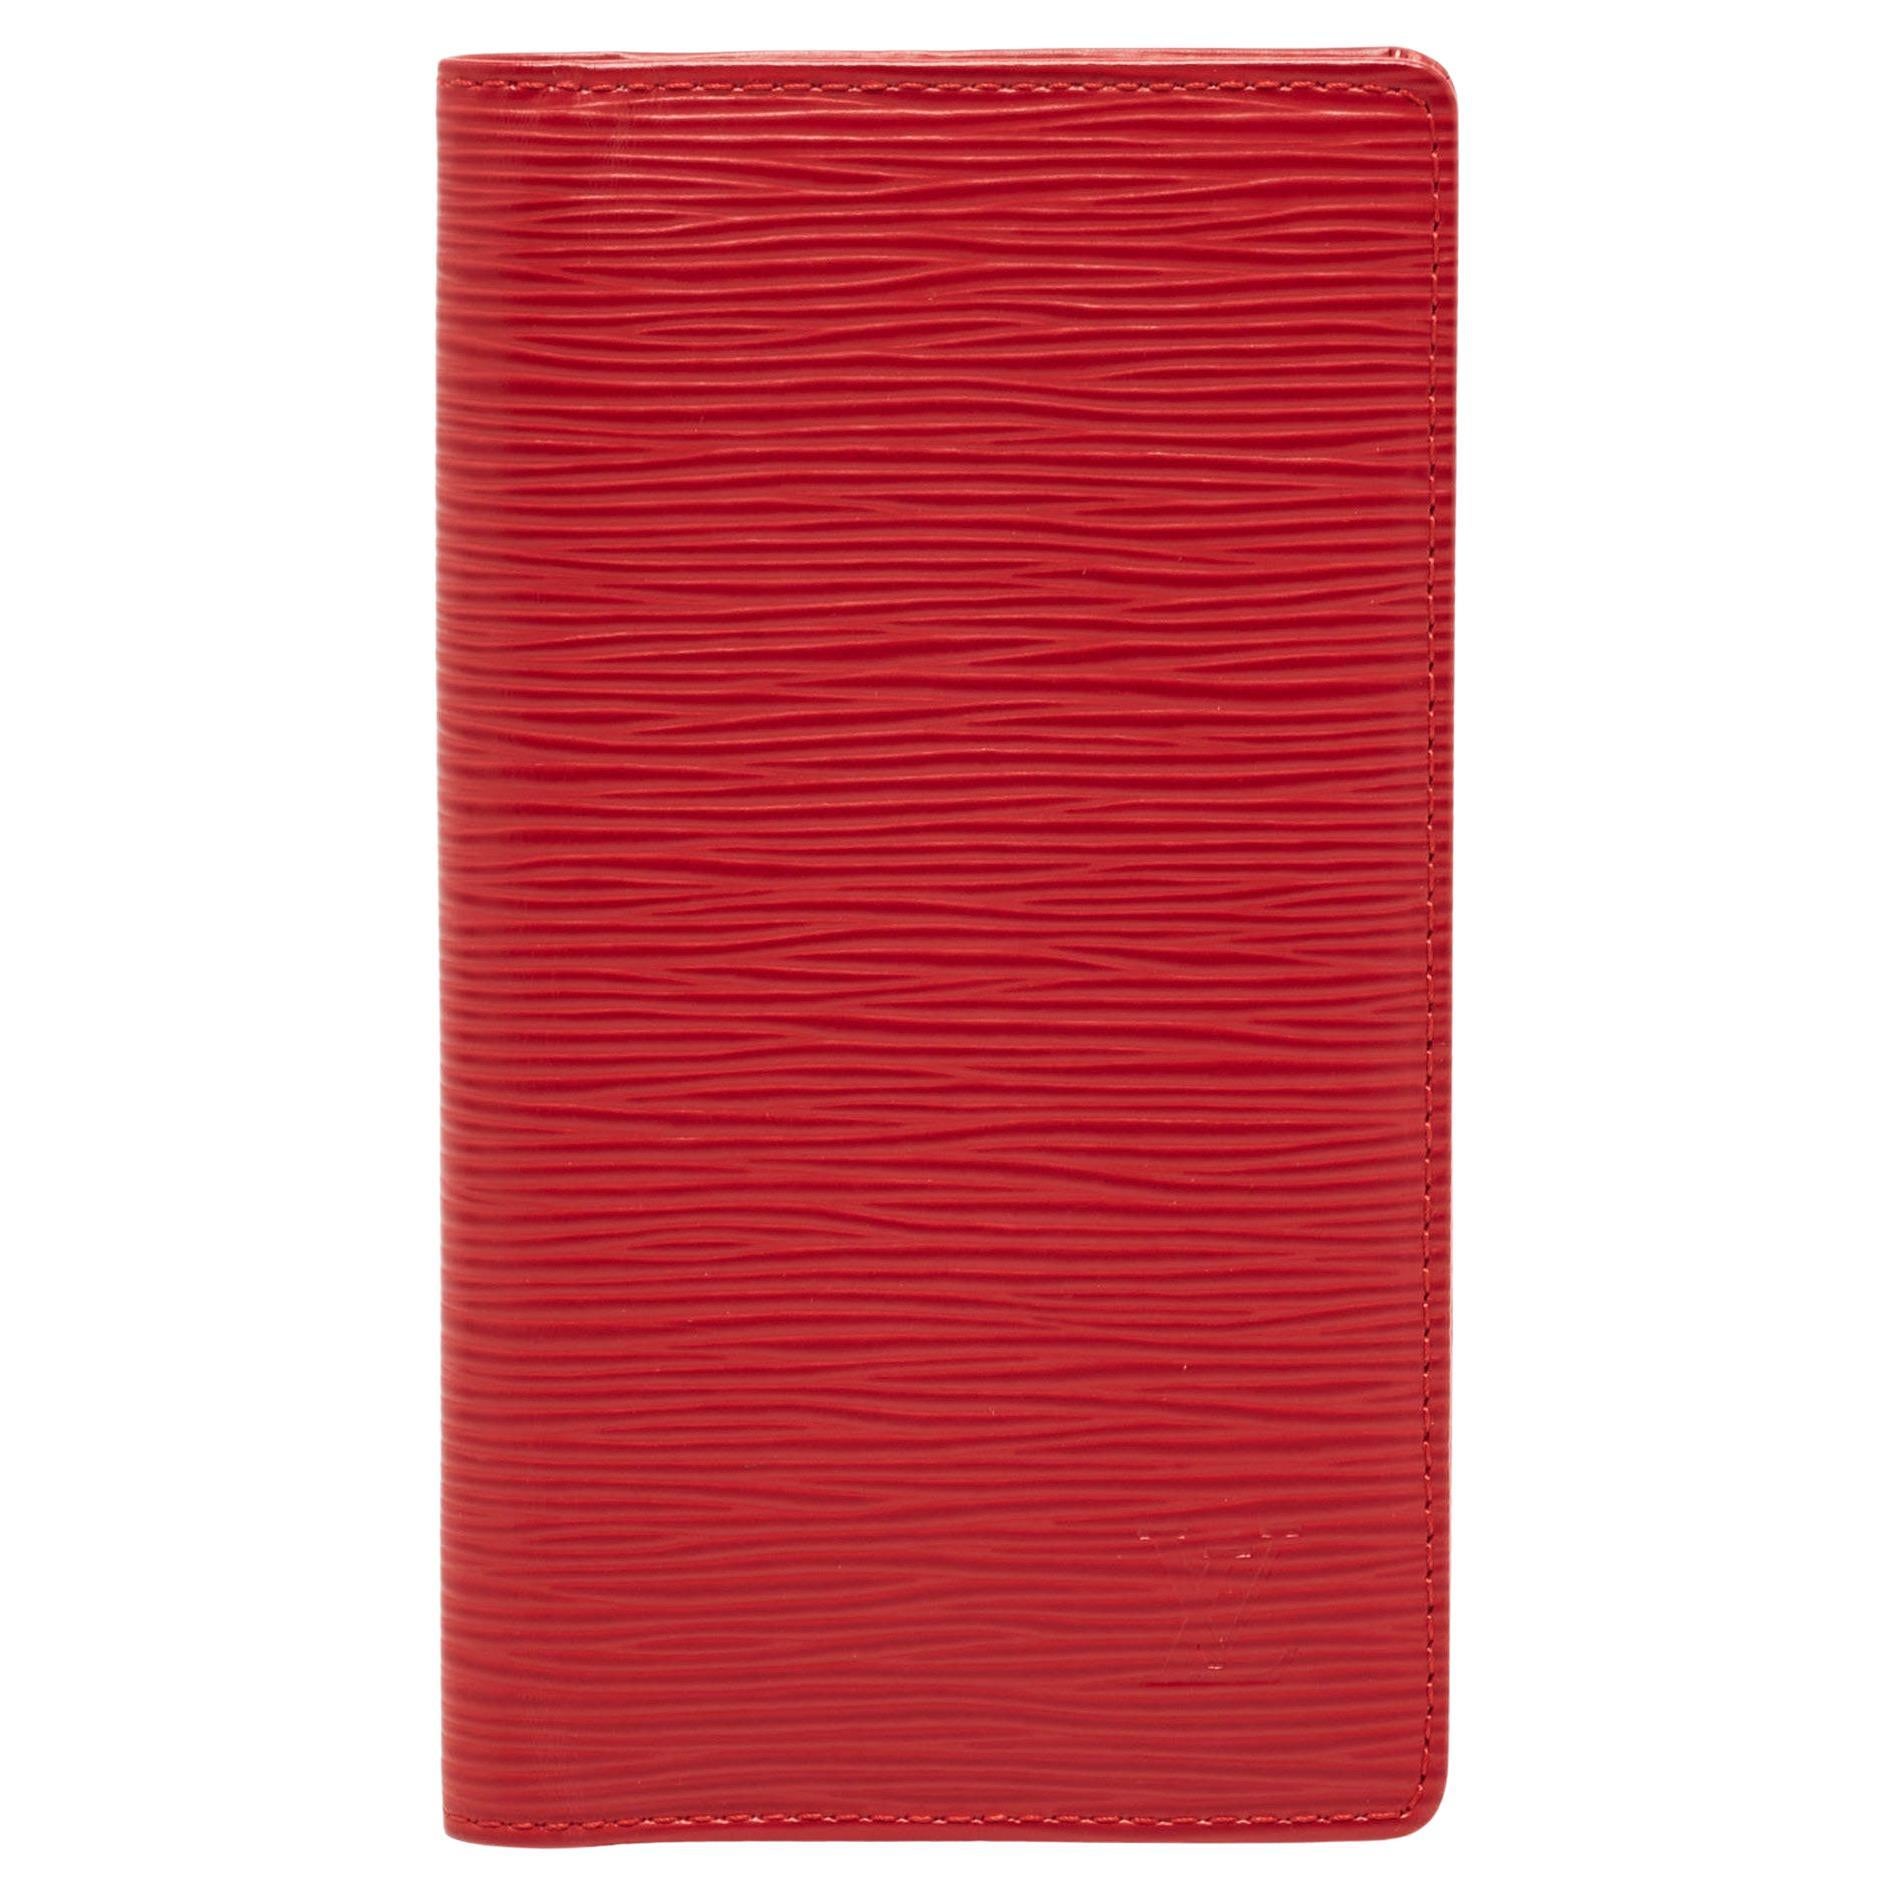 Louis Vuitton Red Epi Leather Pocket Organizer